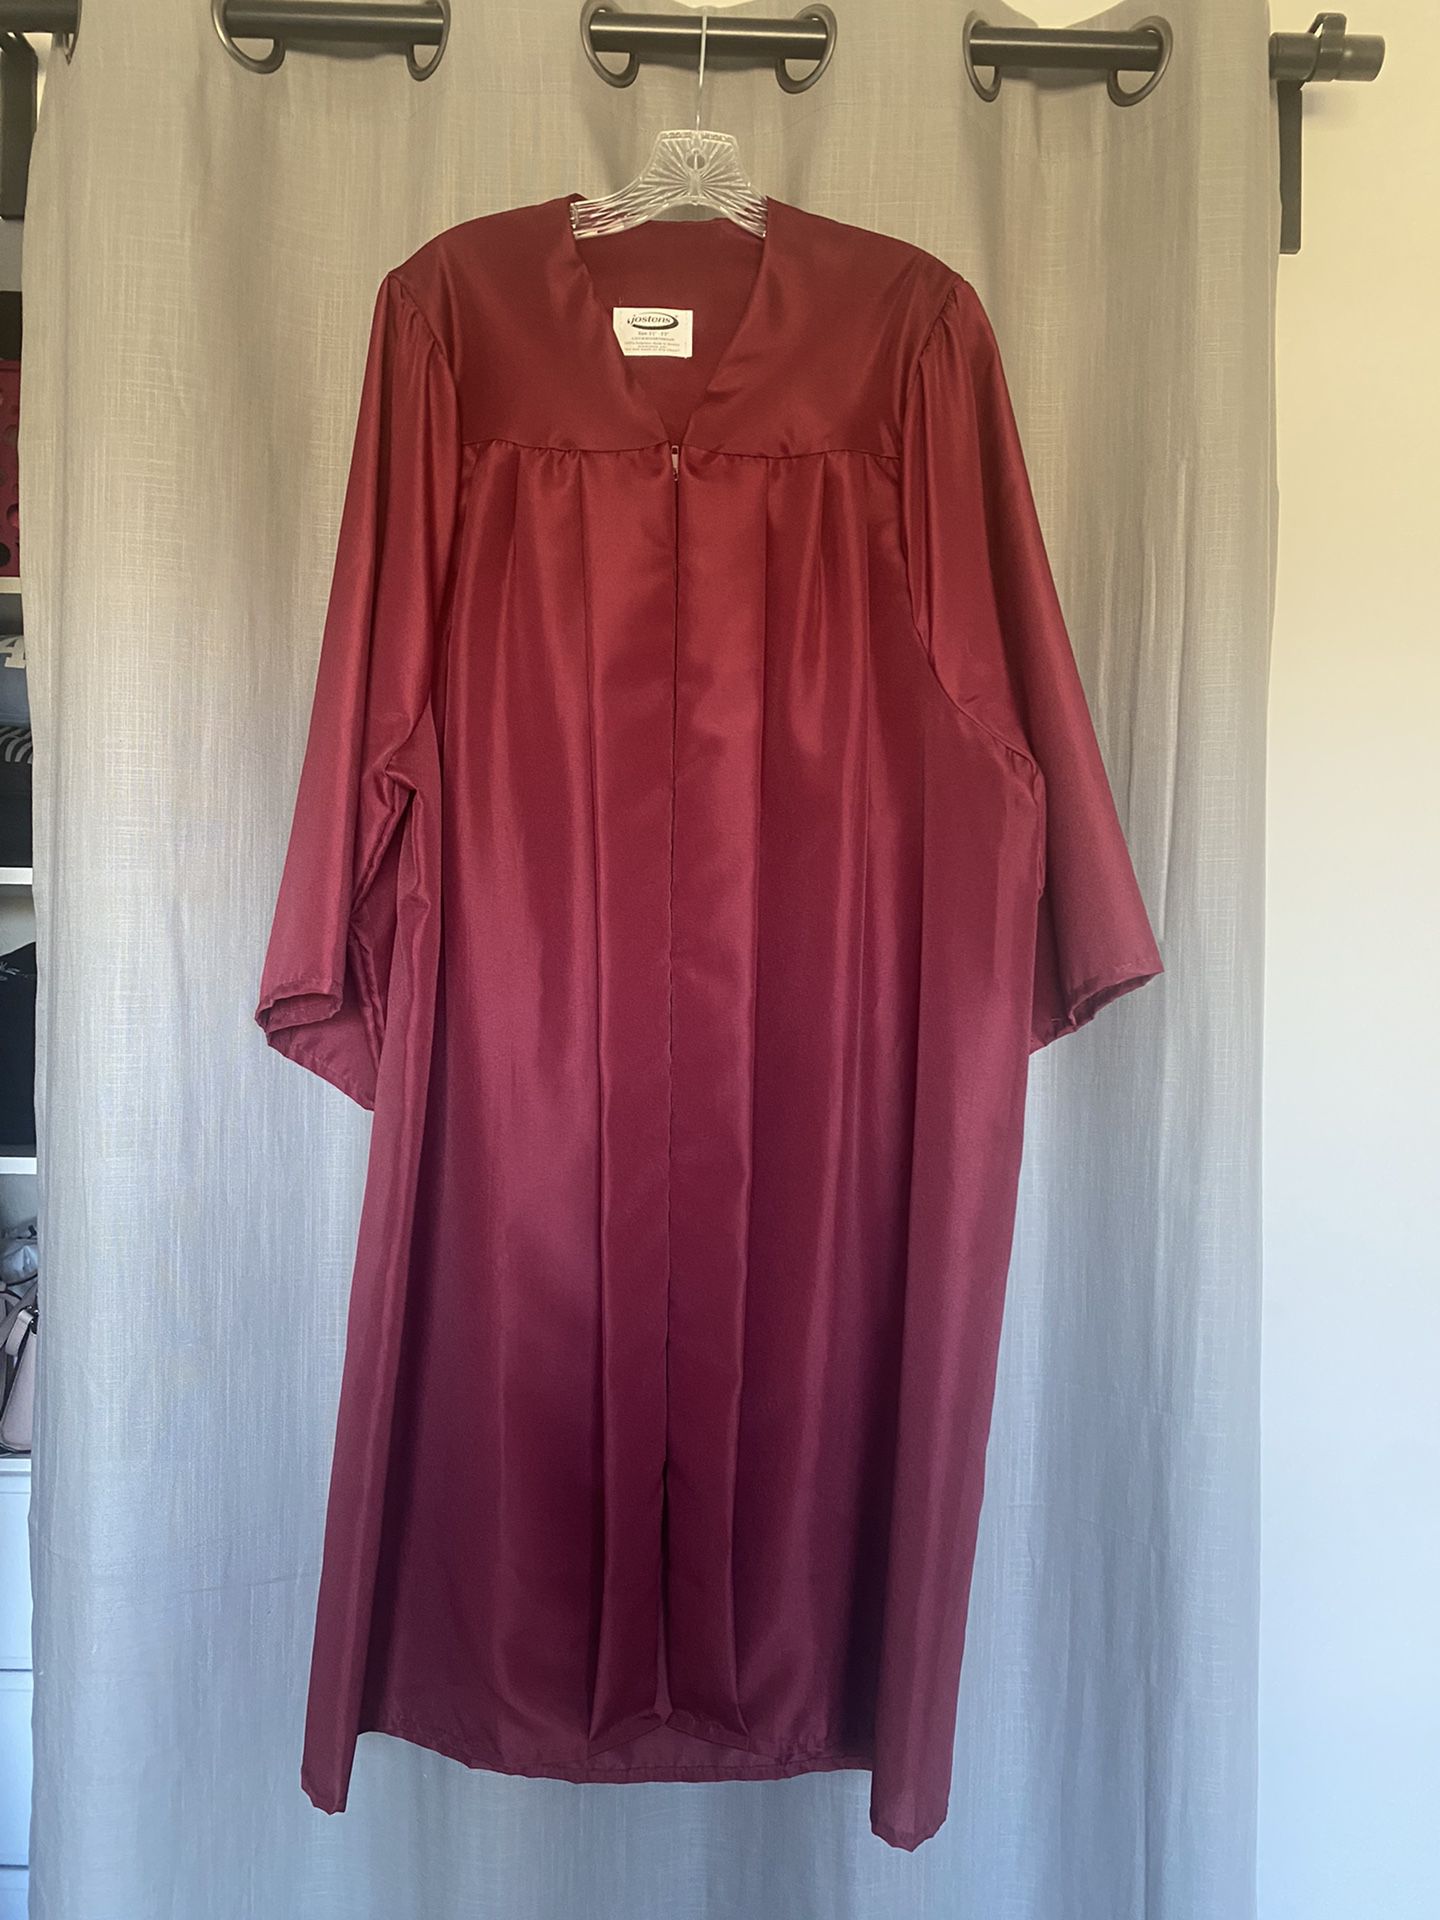 Jostens Graduation Gown and Cap